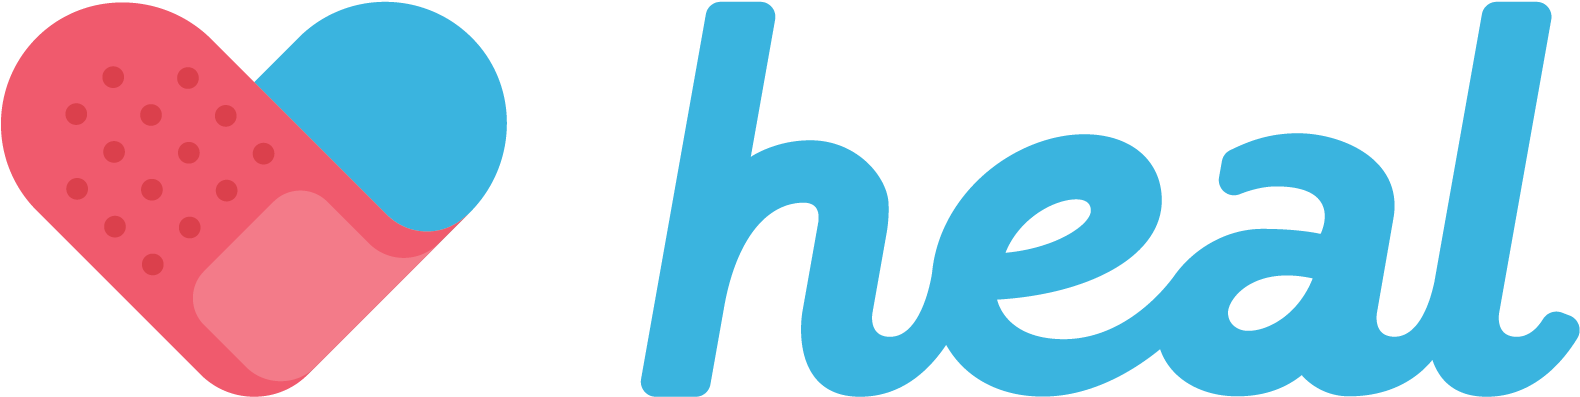 Heal App Logo Png (2024x899)